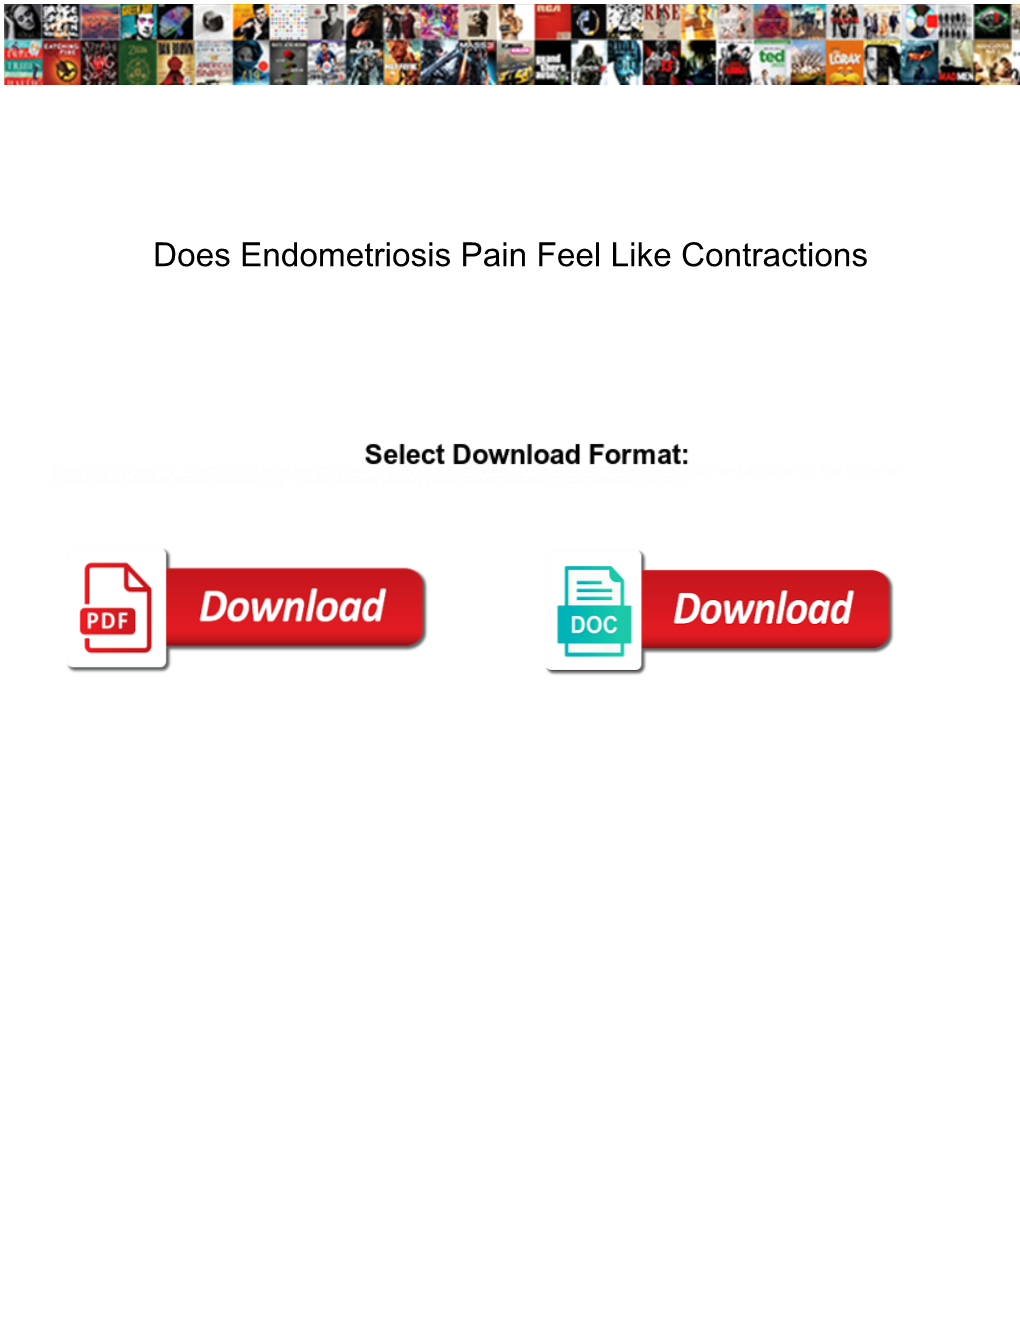 Does Endometriosis Pain Feel Like Contractions